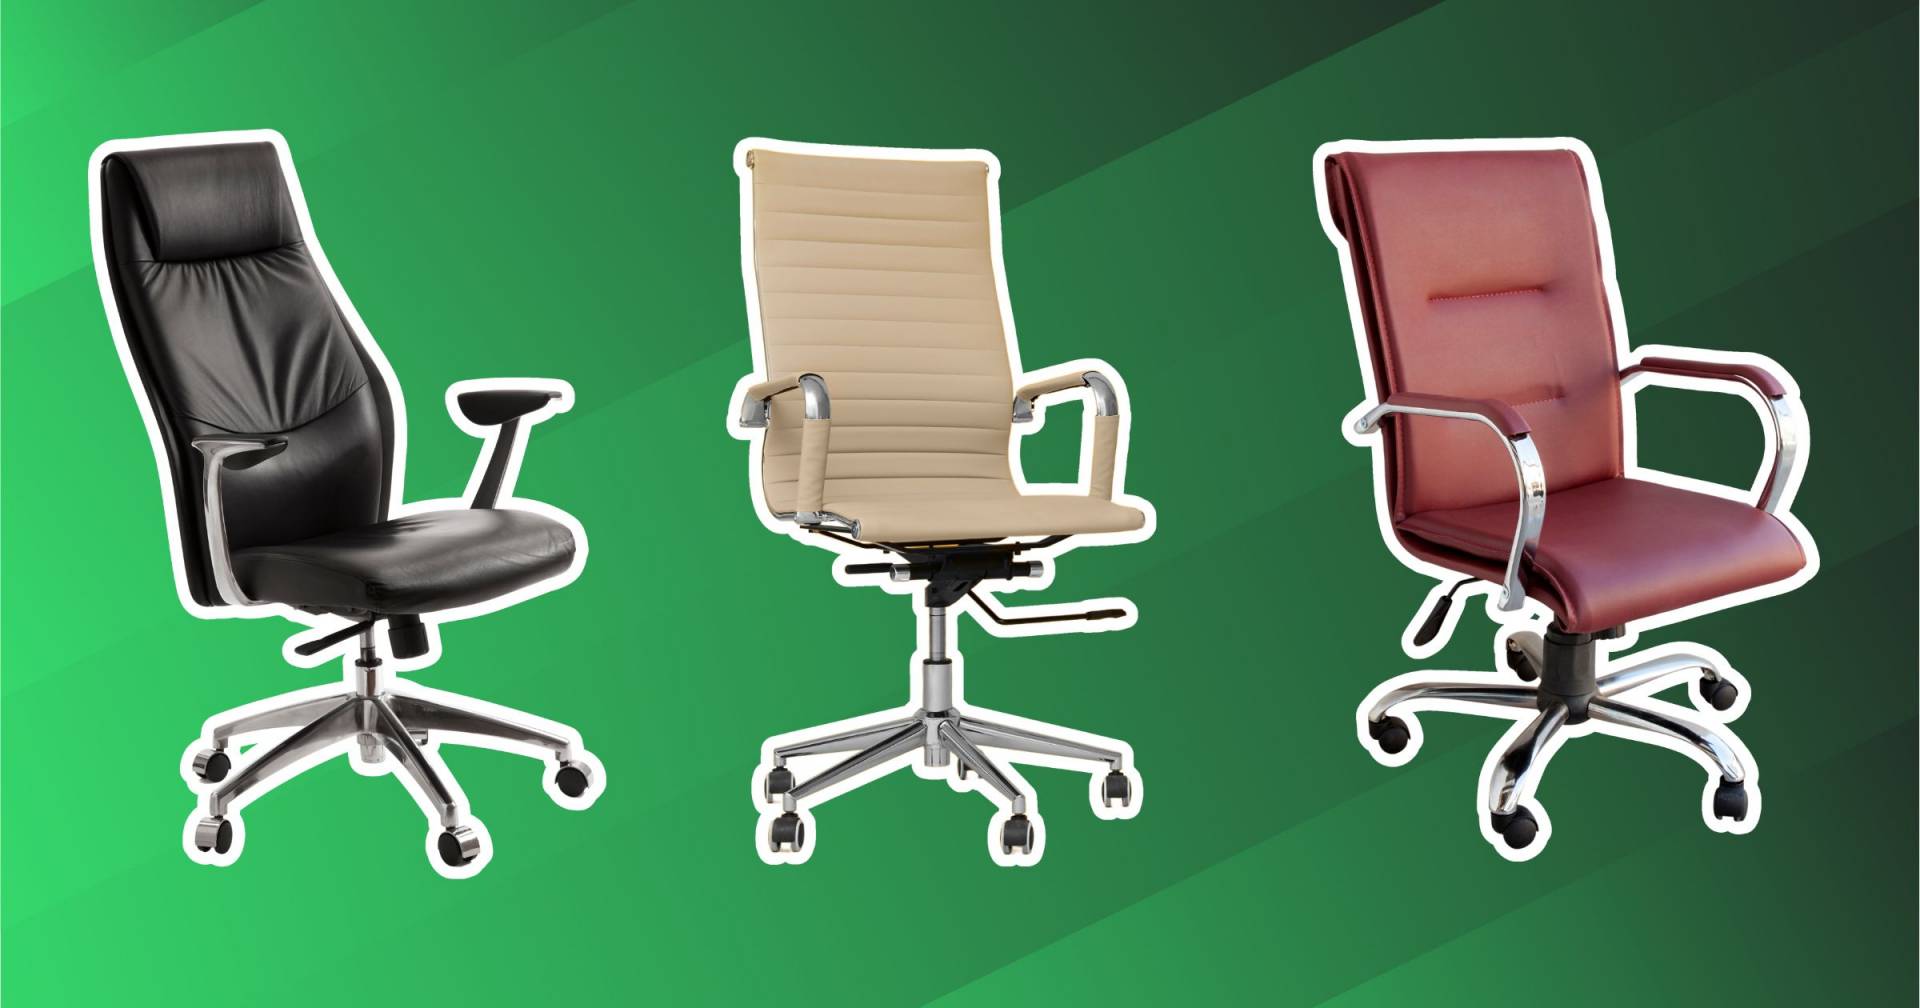 Best Luxury Office Chair 1681970143 1920 60 